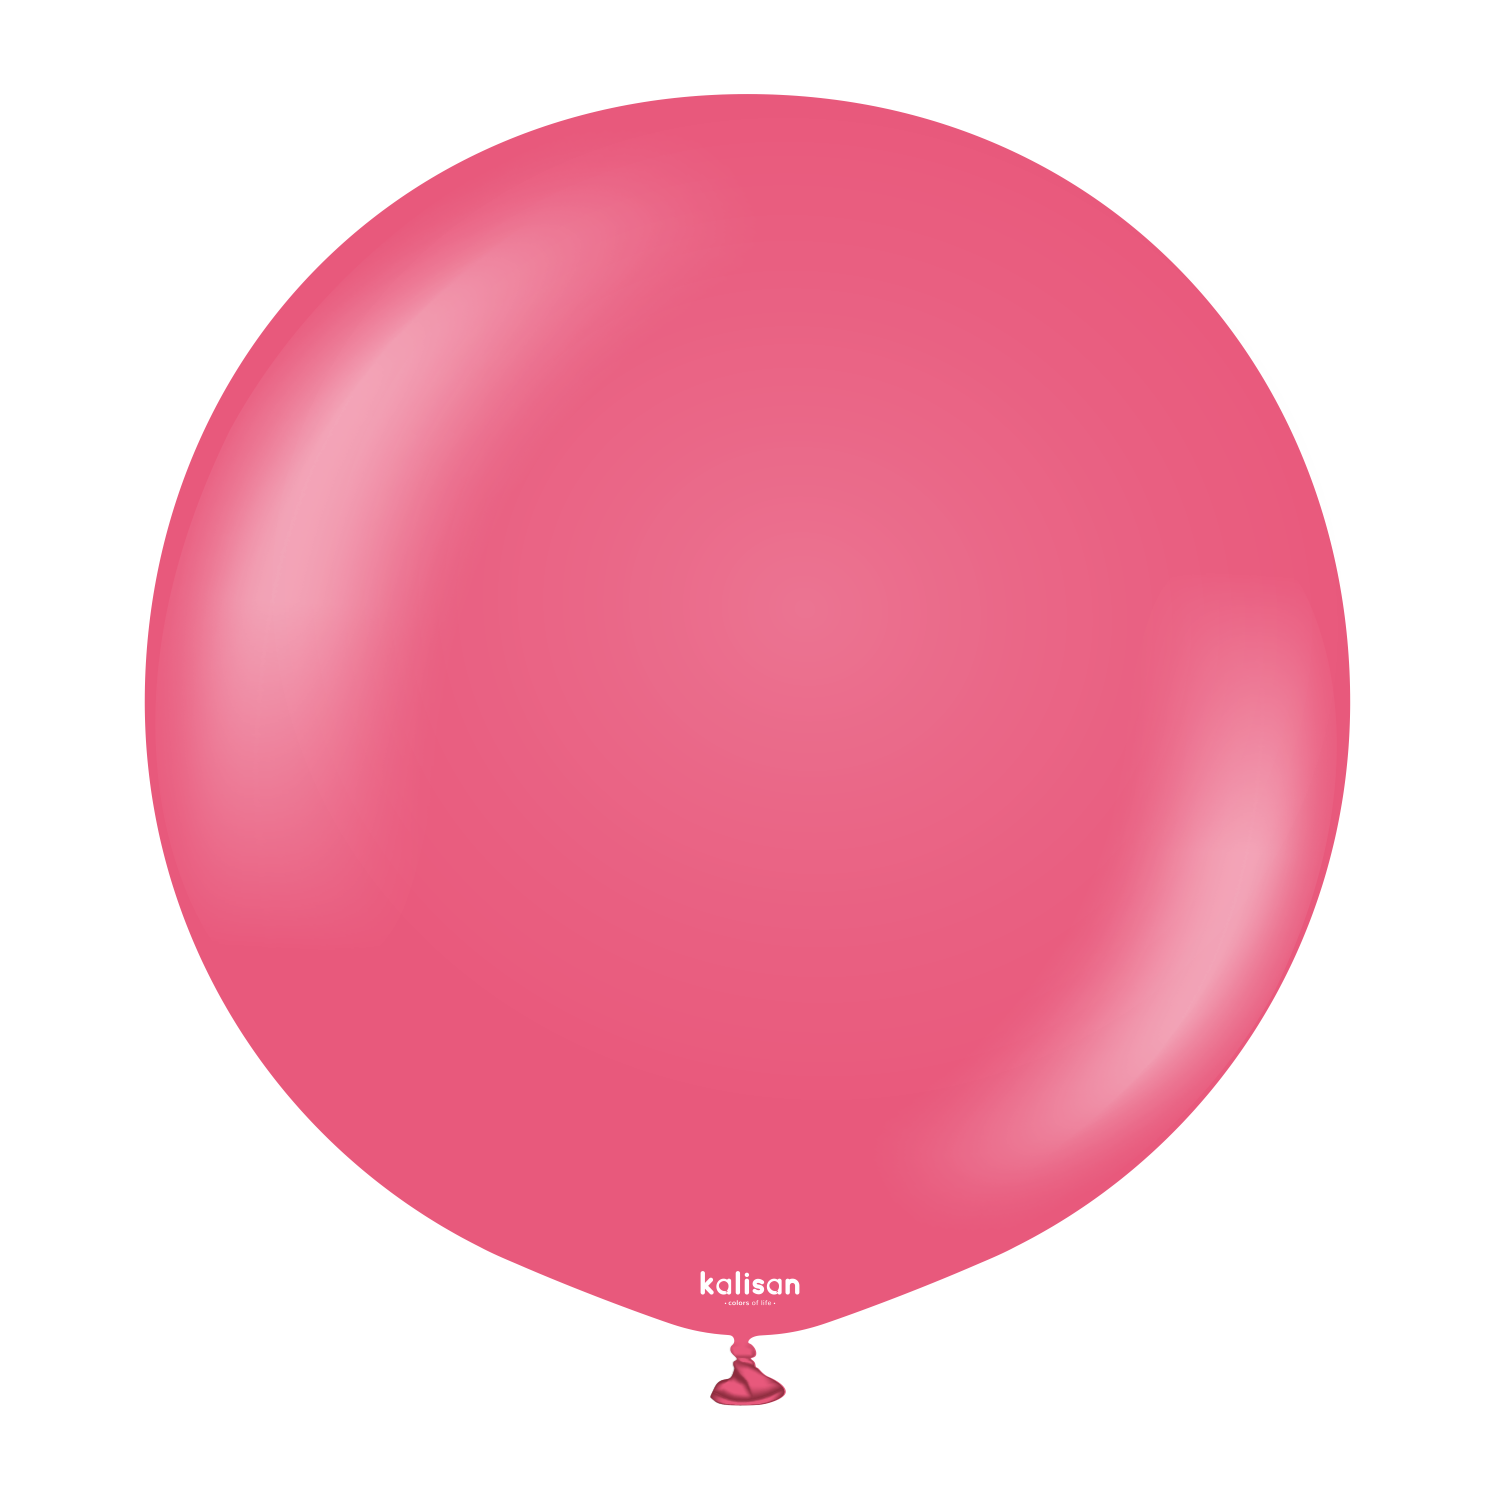 Premium lateksballong Kalisan i fuchsia farge 